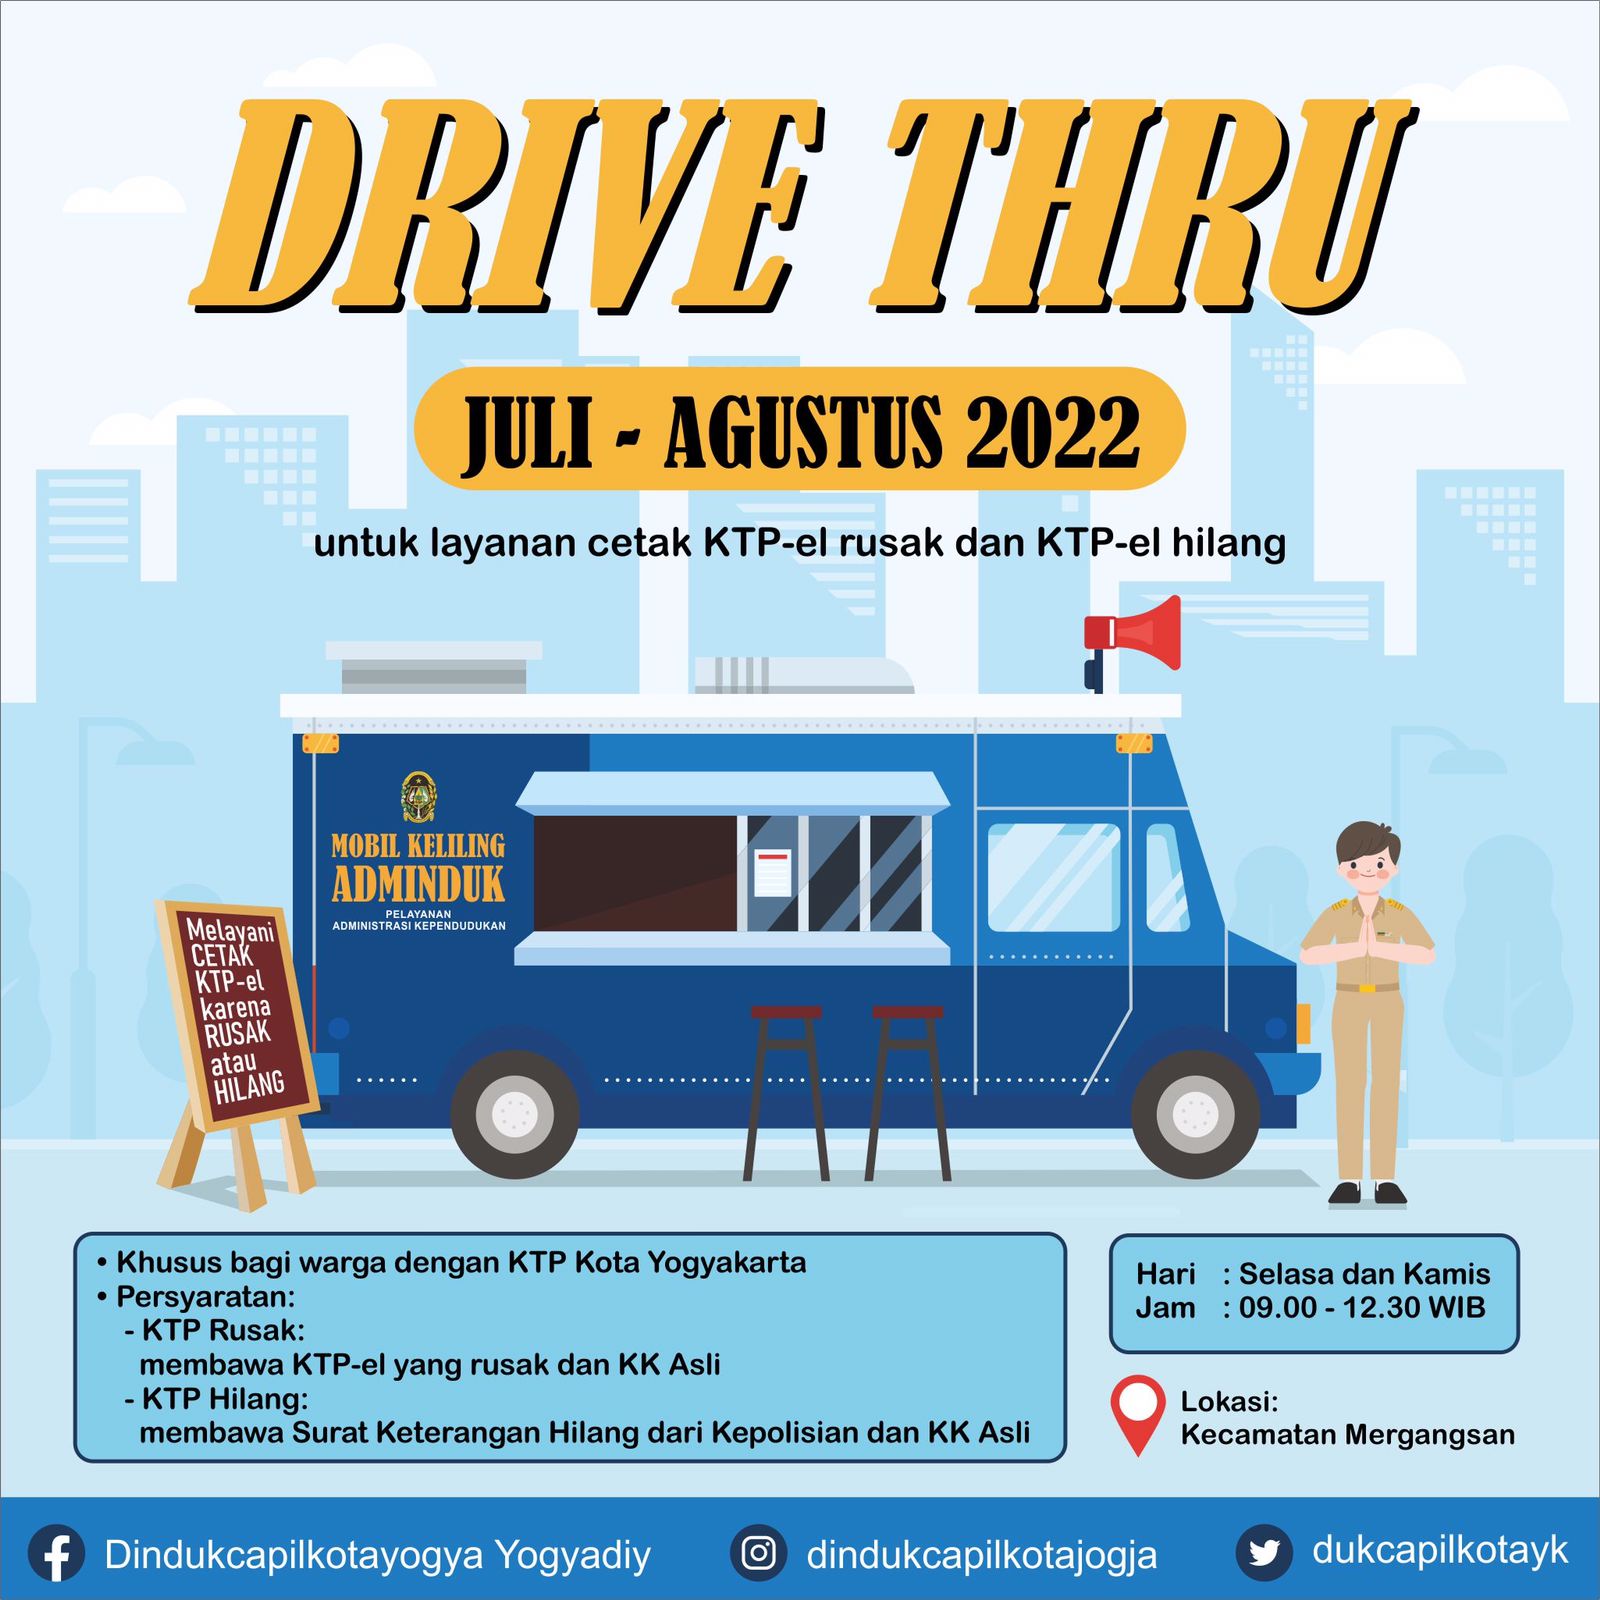 Jadwal Drive Thru di Kemantren Mergangsan Bulan Juli - Agustus 2022